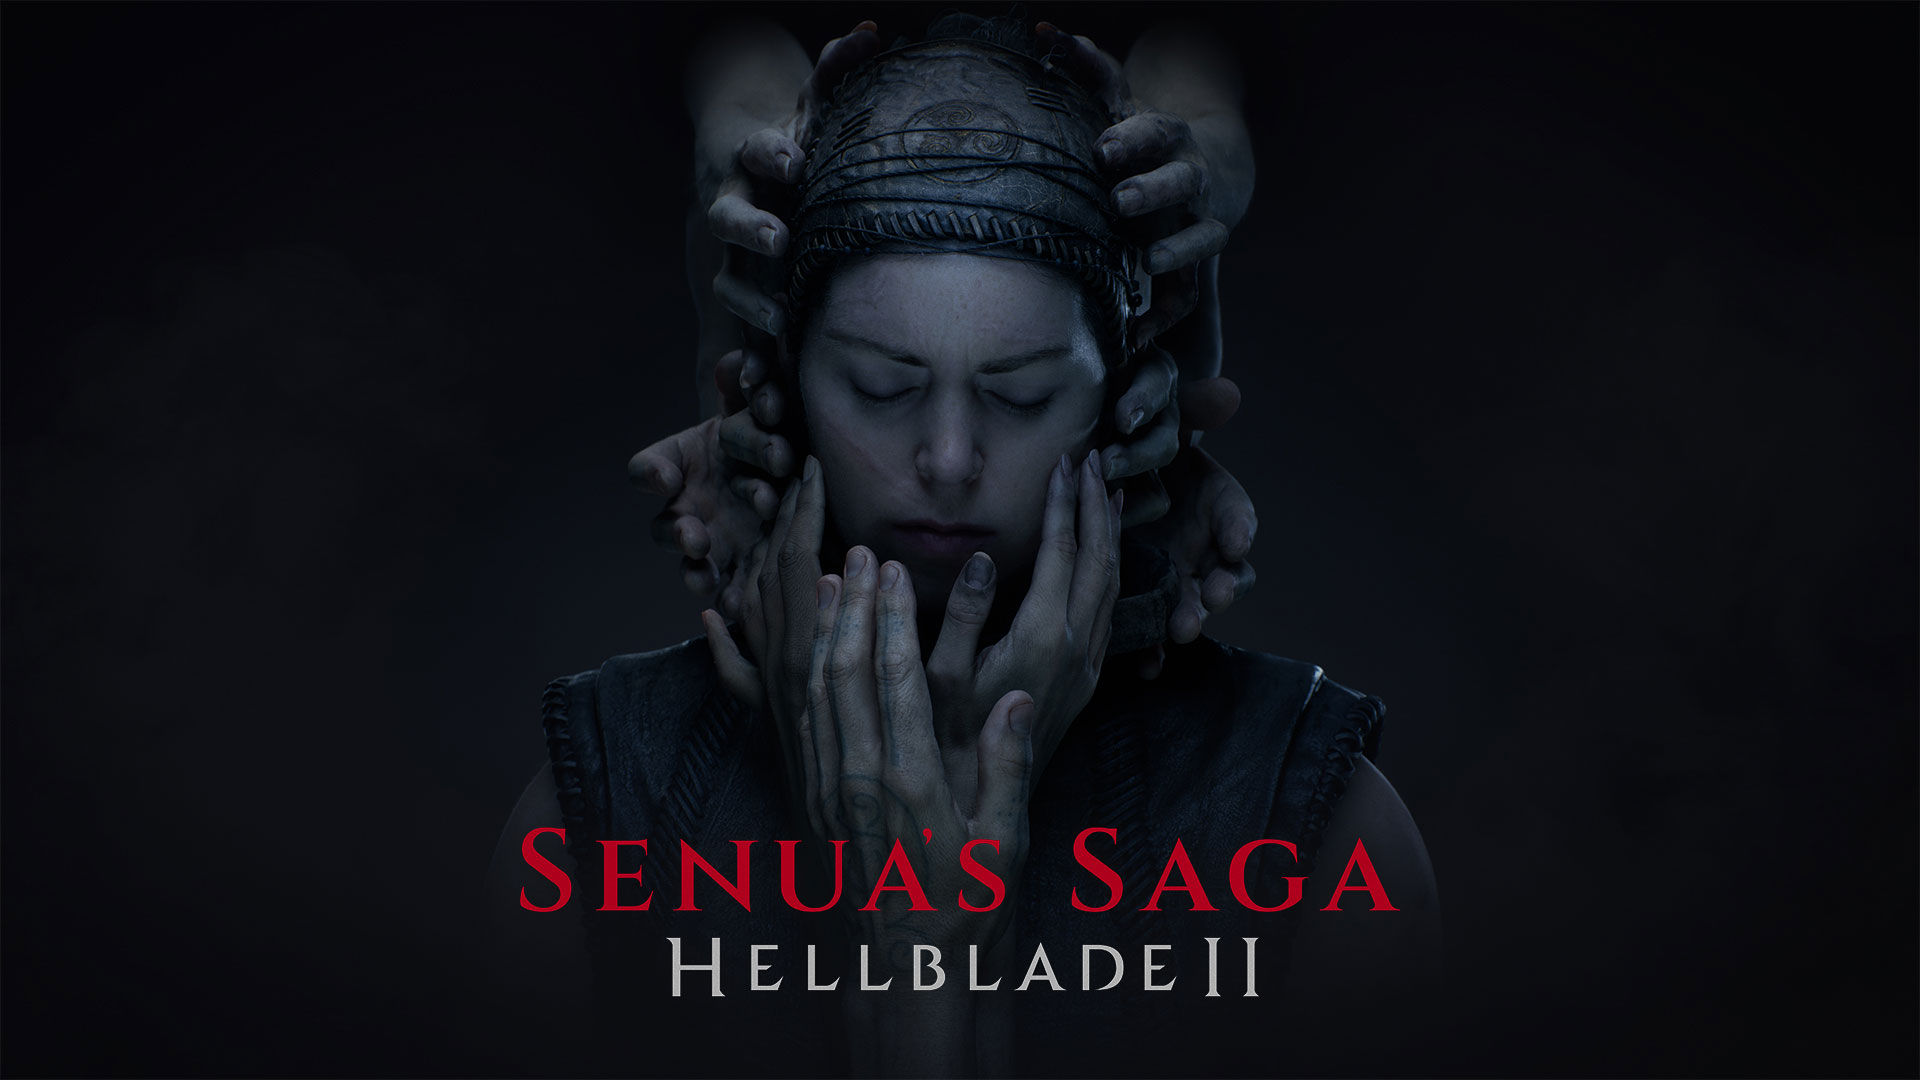 Senua's Saga: Hellblade II launches May 21 on Xbox Series X|S and PC